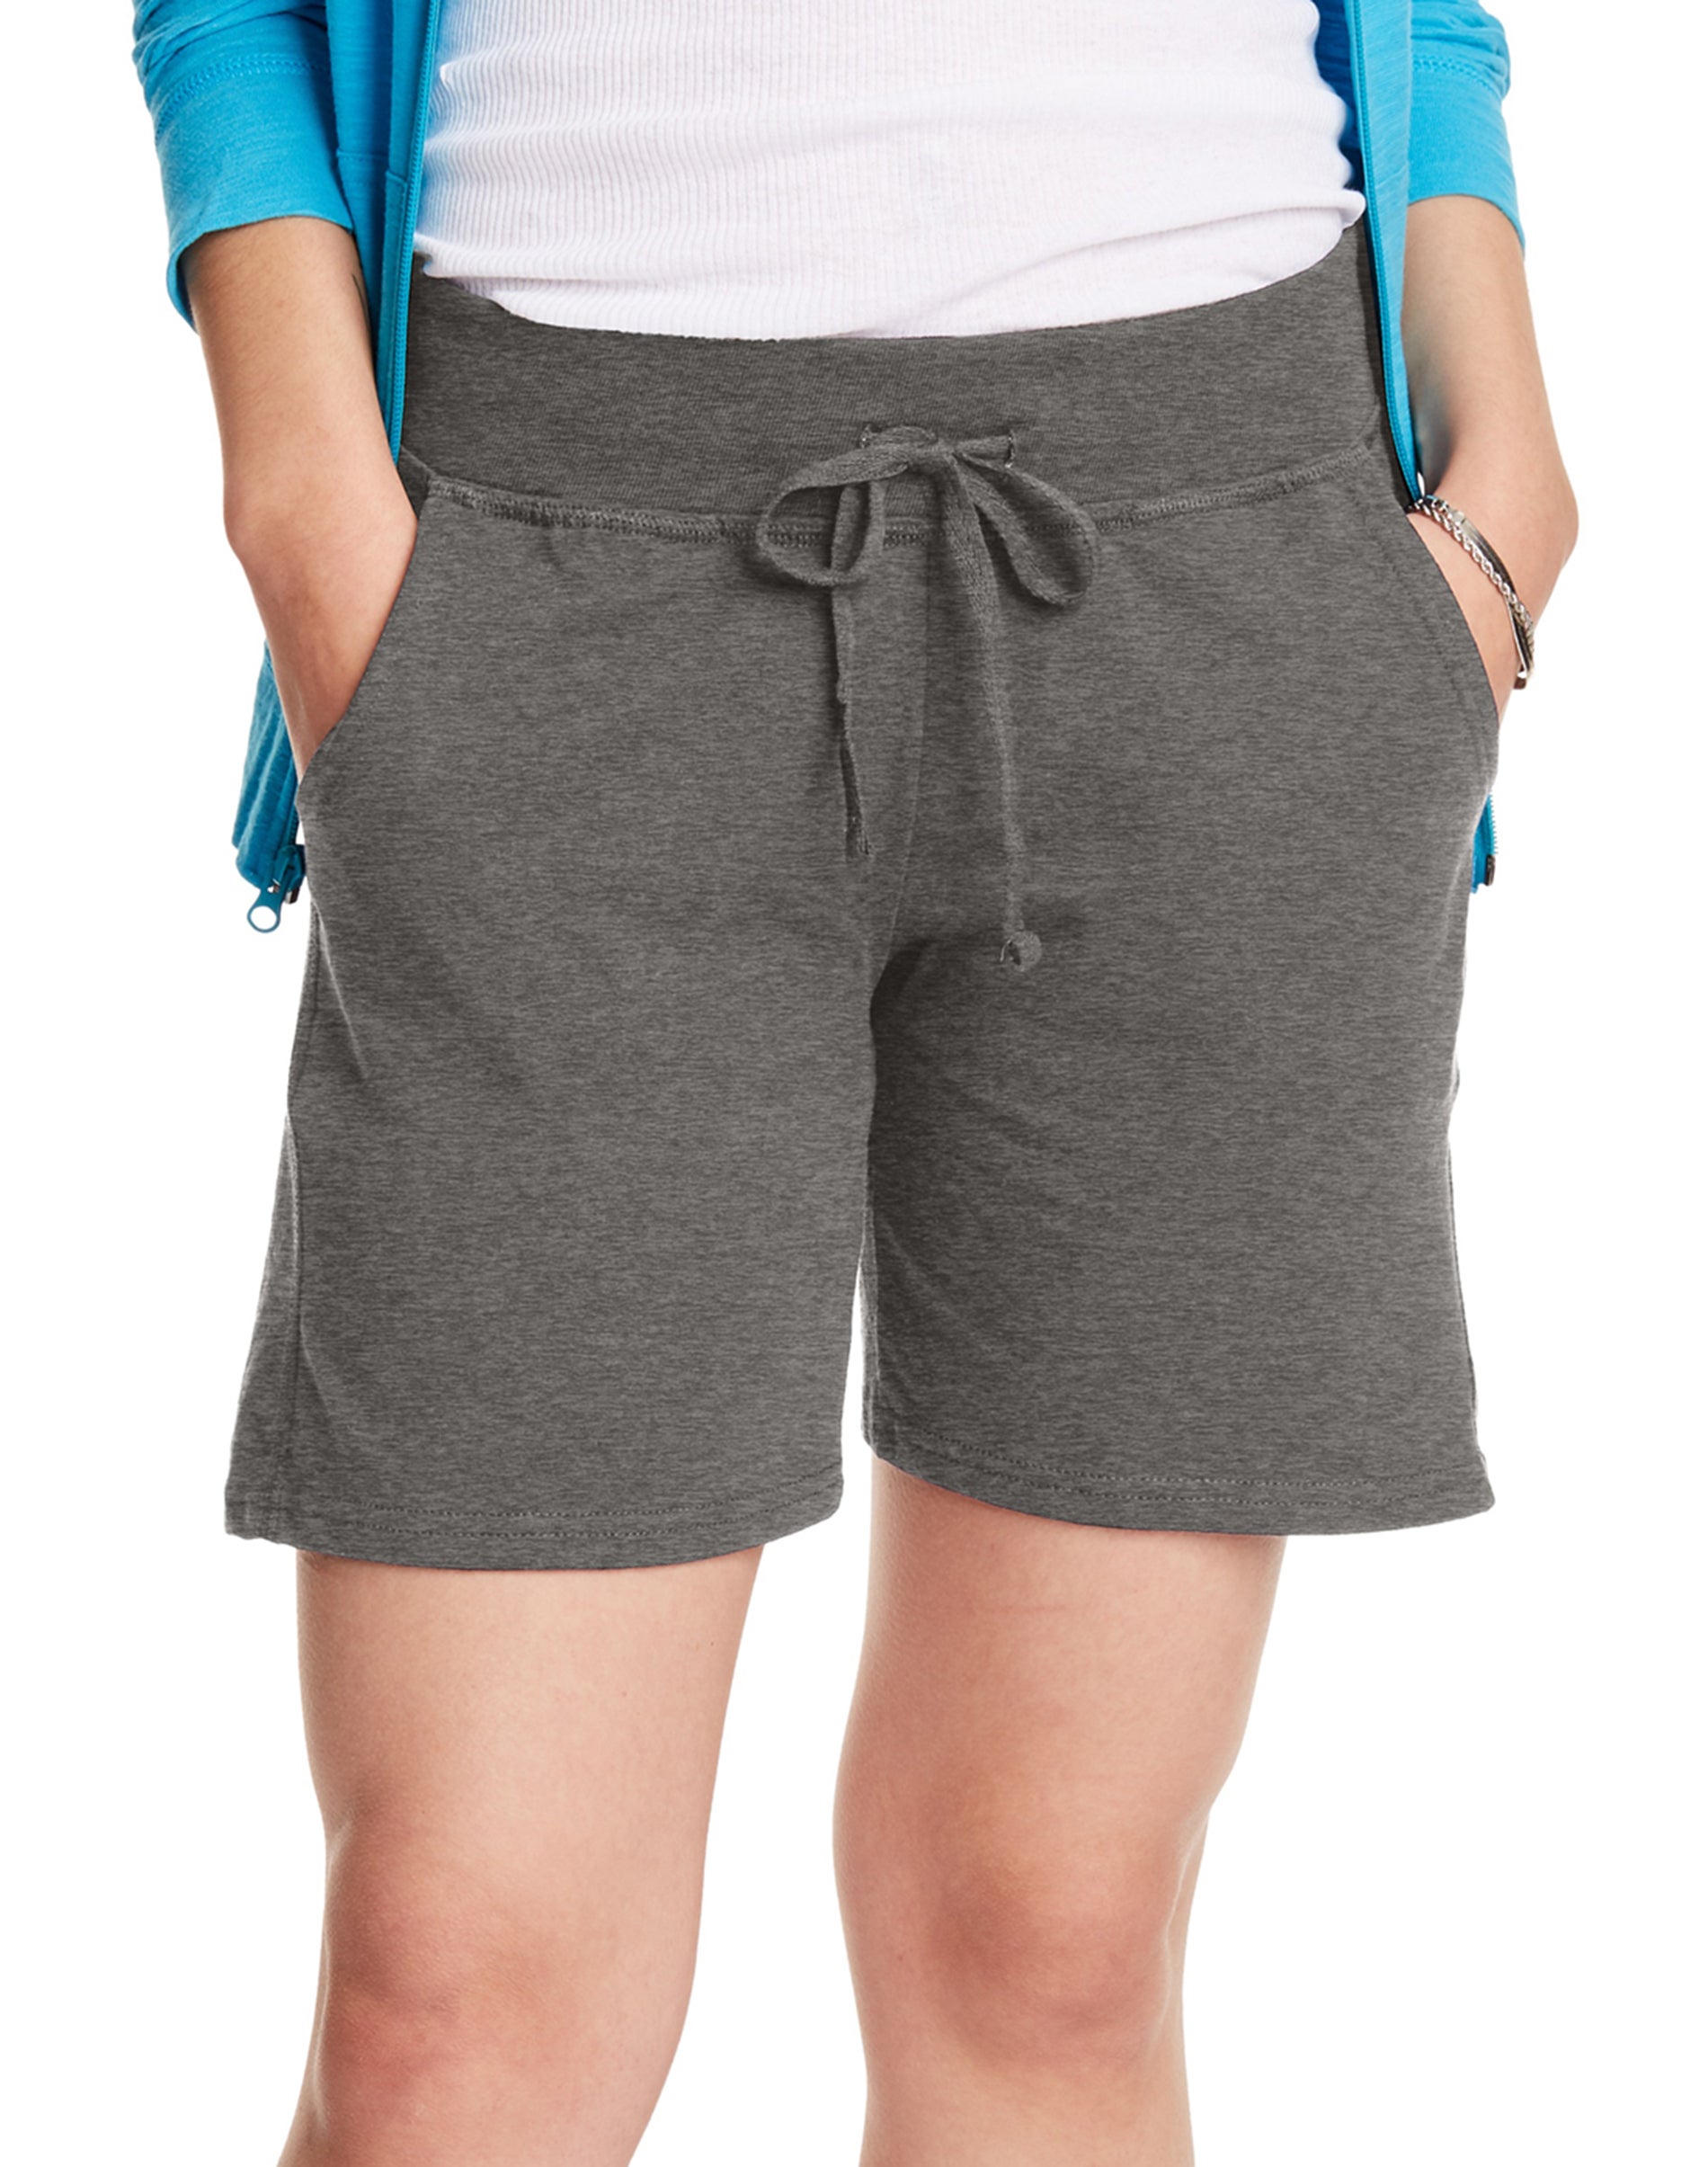 Hanes Women’s Jersey Shorts